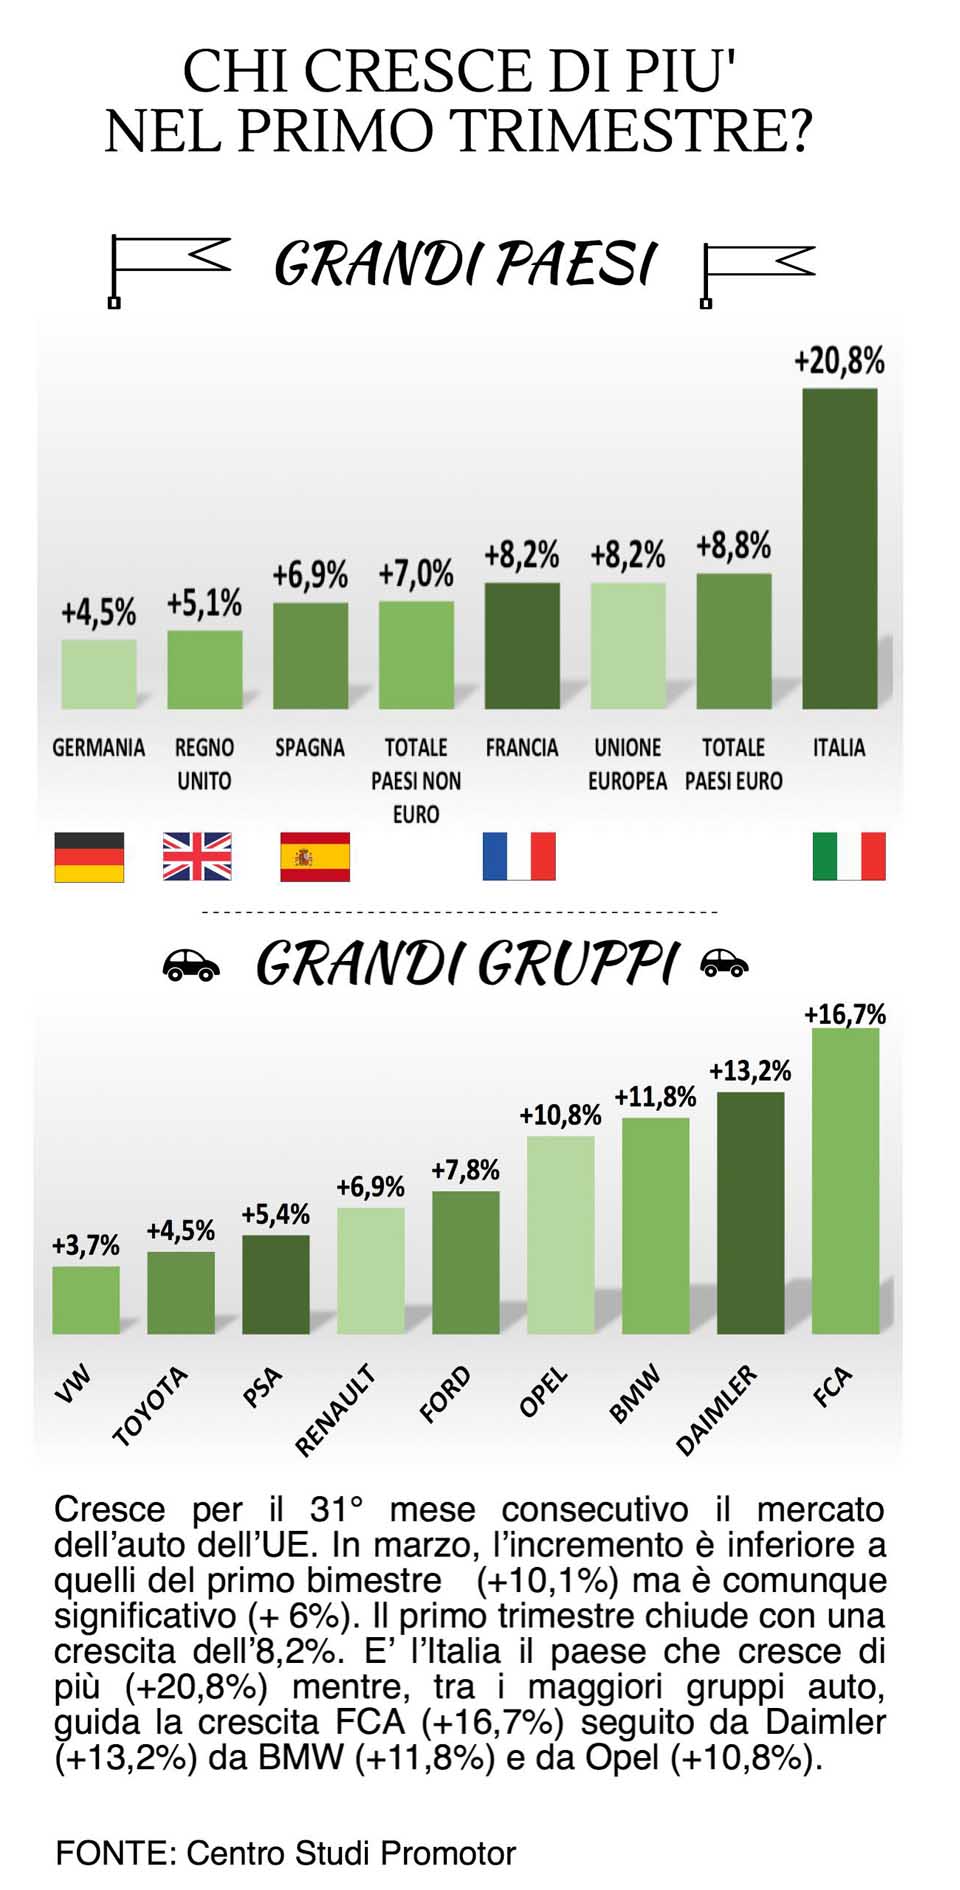 Promotor andamento mercato auto europa marzo 2015 2